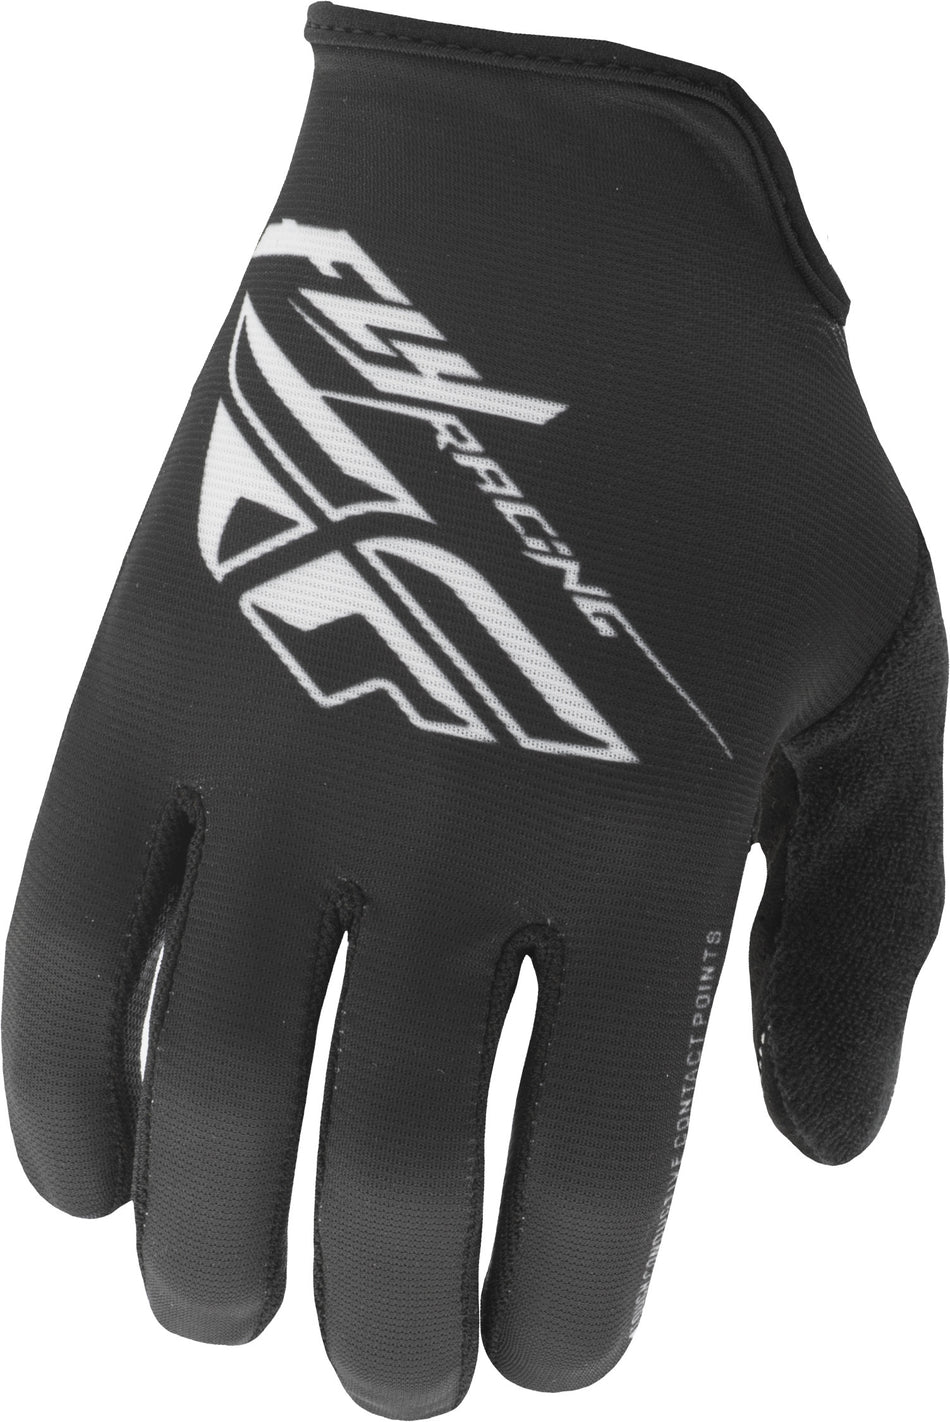 FLY RACING Media Gloves Black Sz 12 350-09012